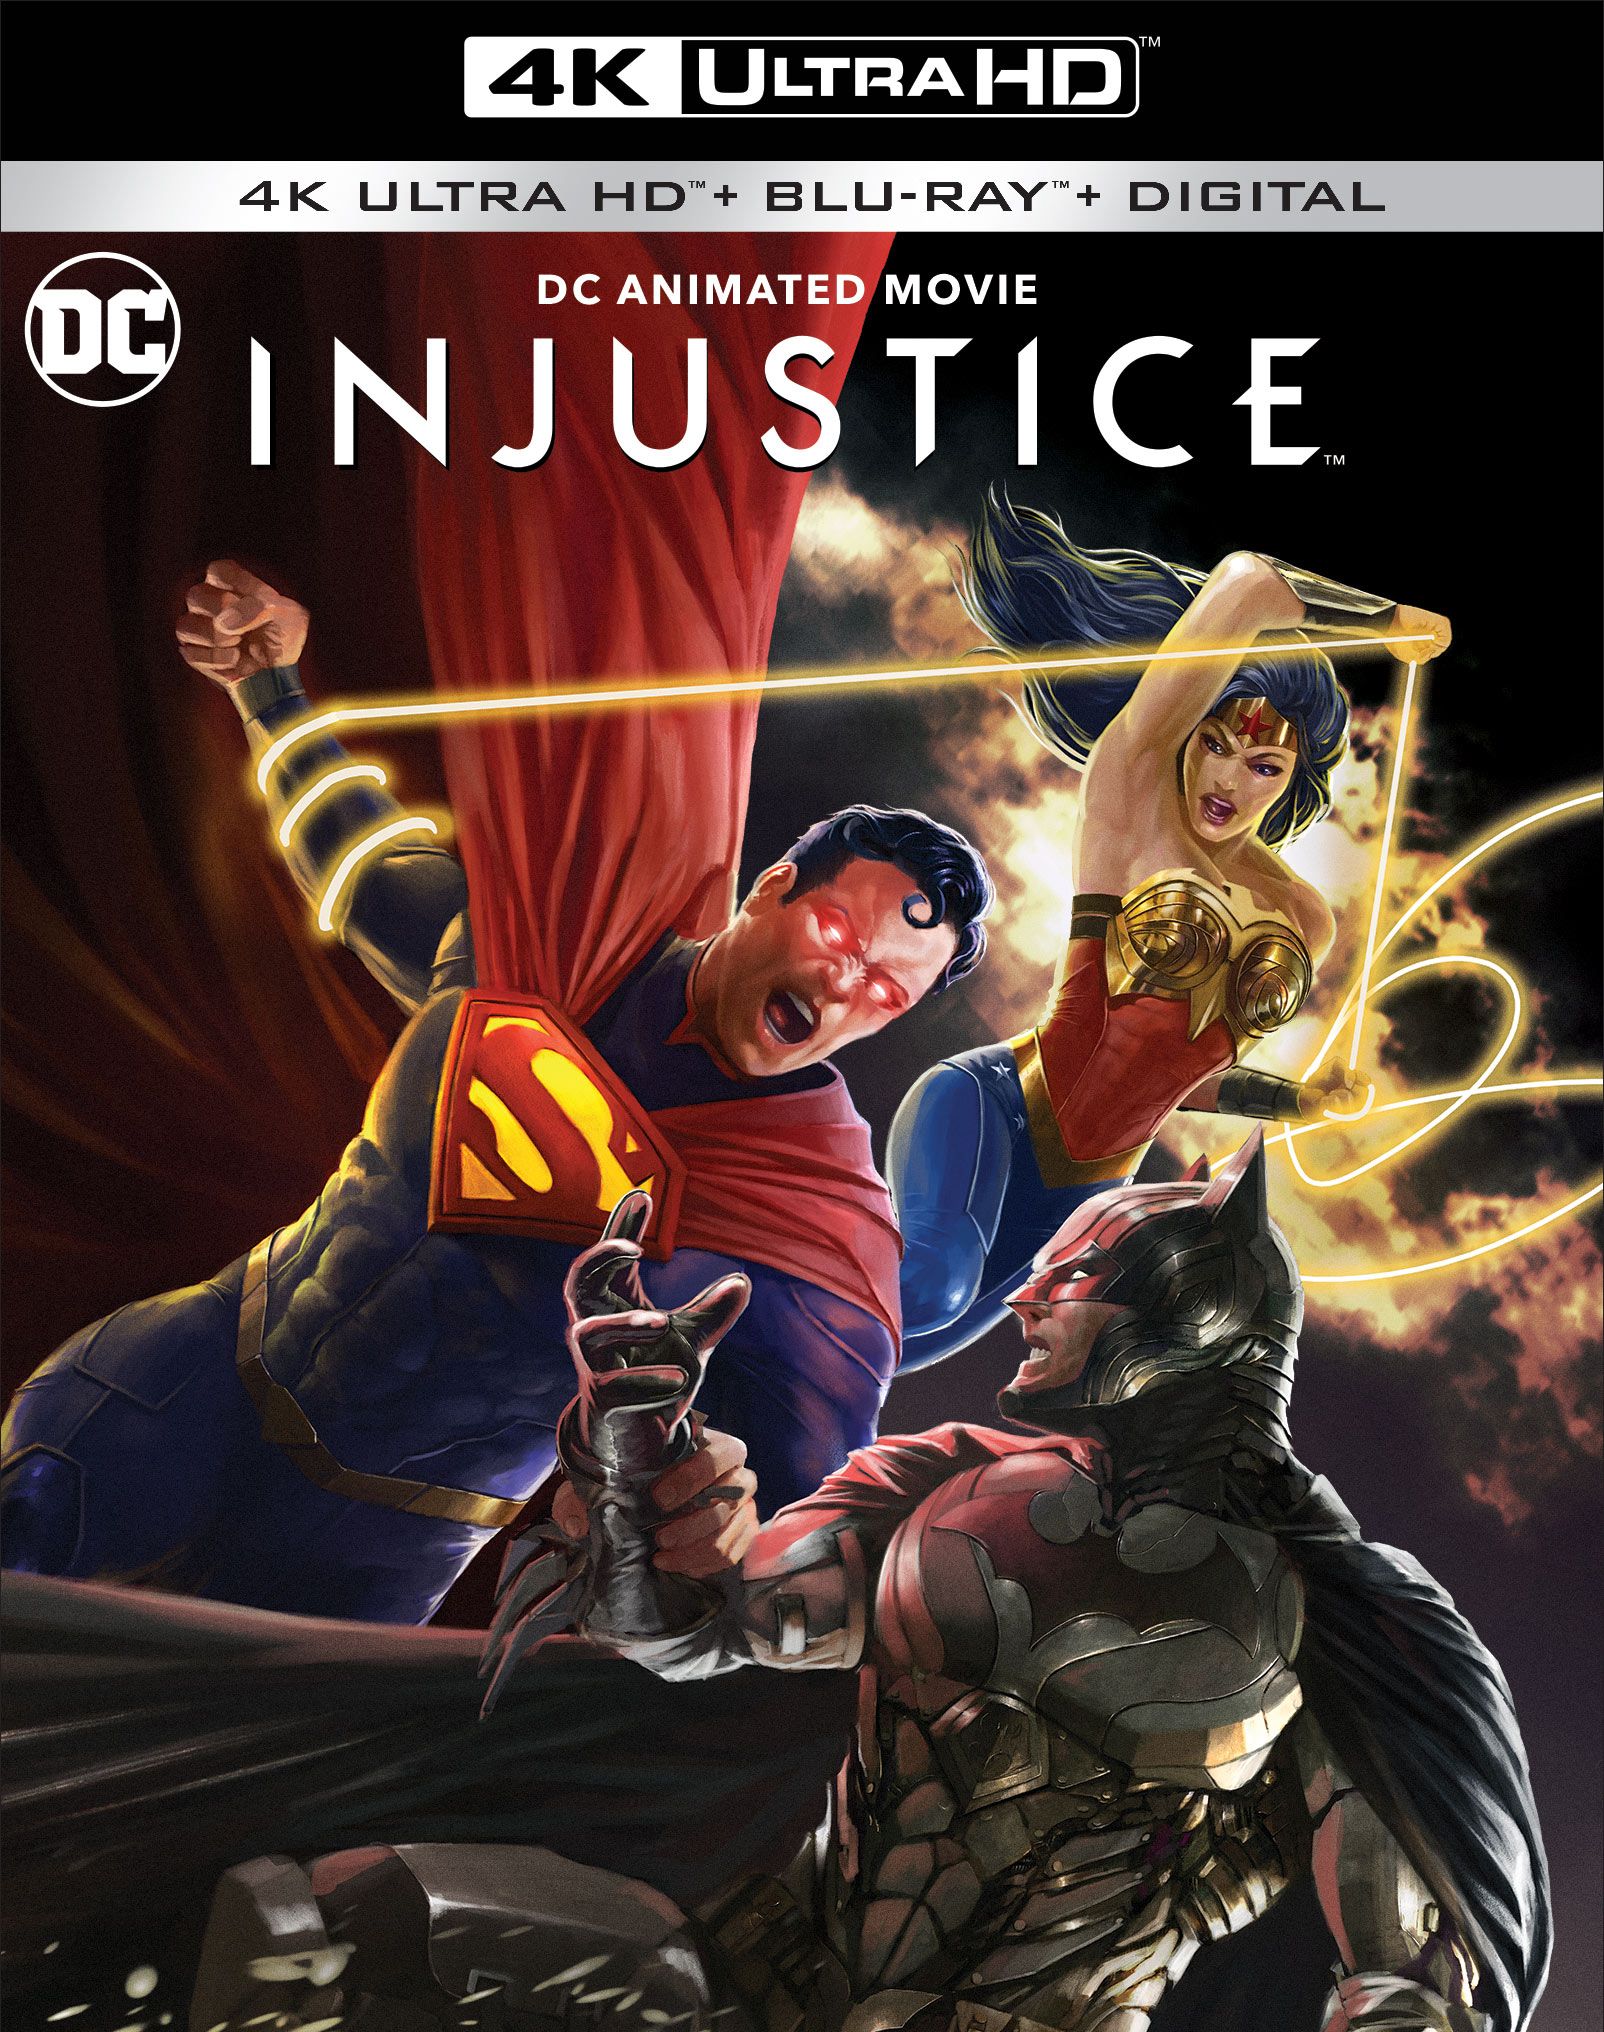 Injustice animated movie 4K Ultra HD box art